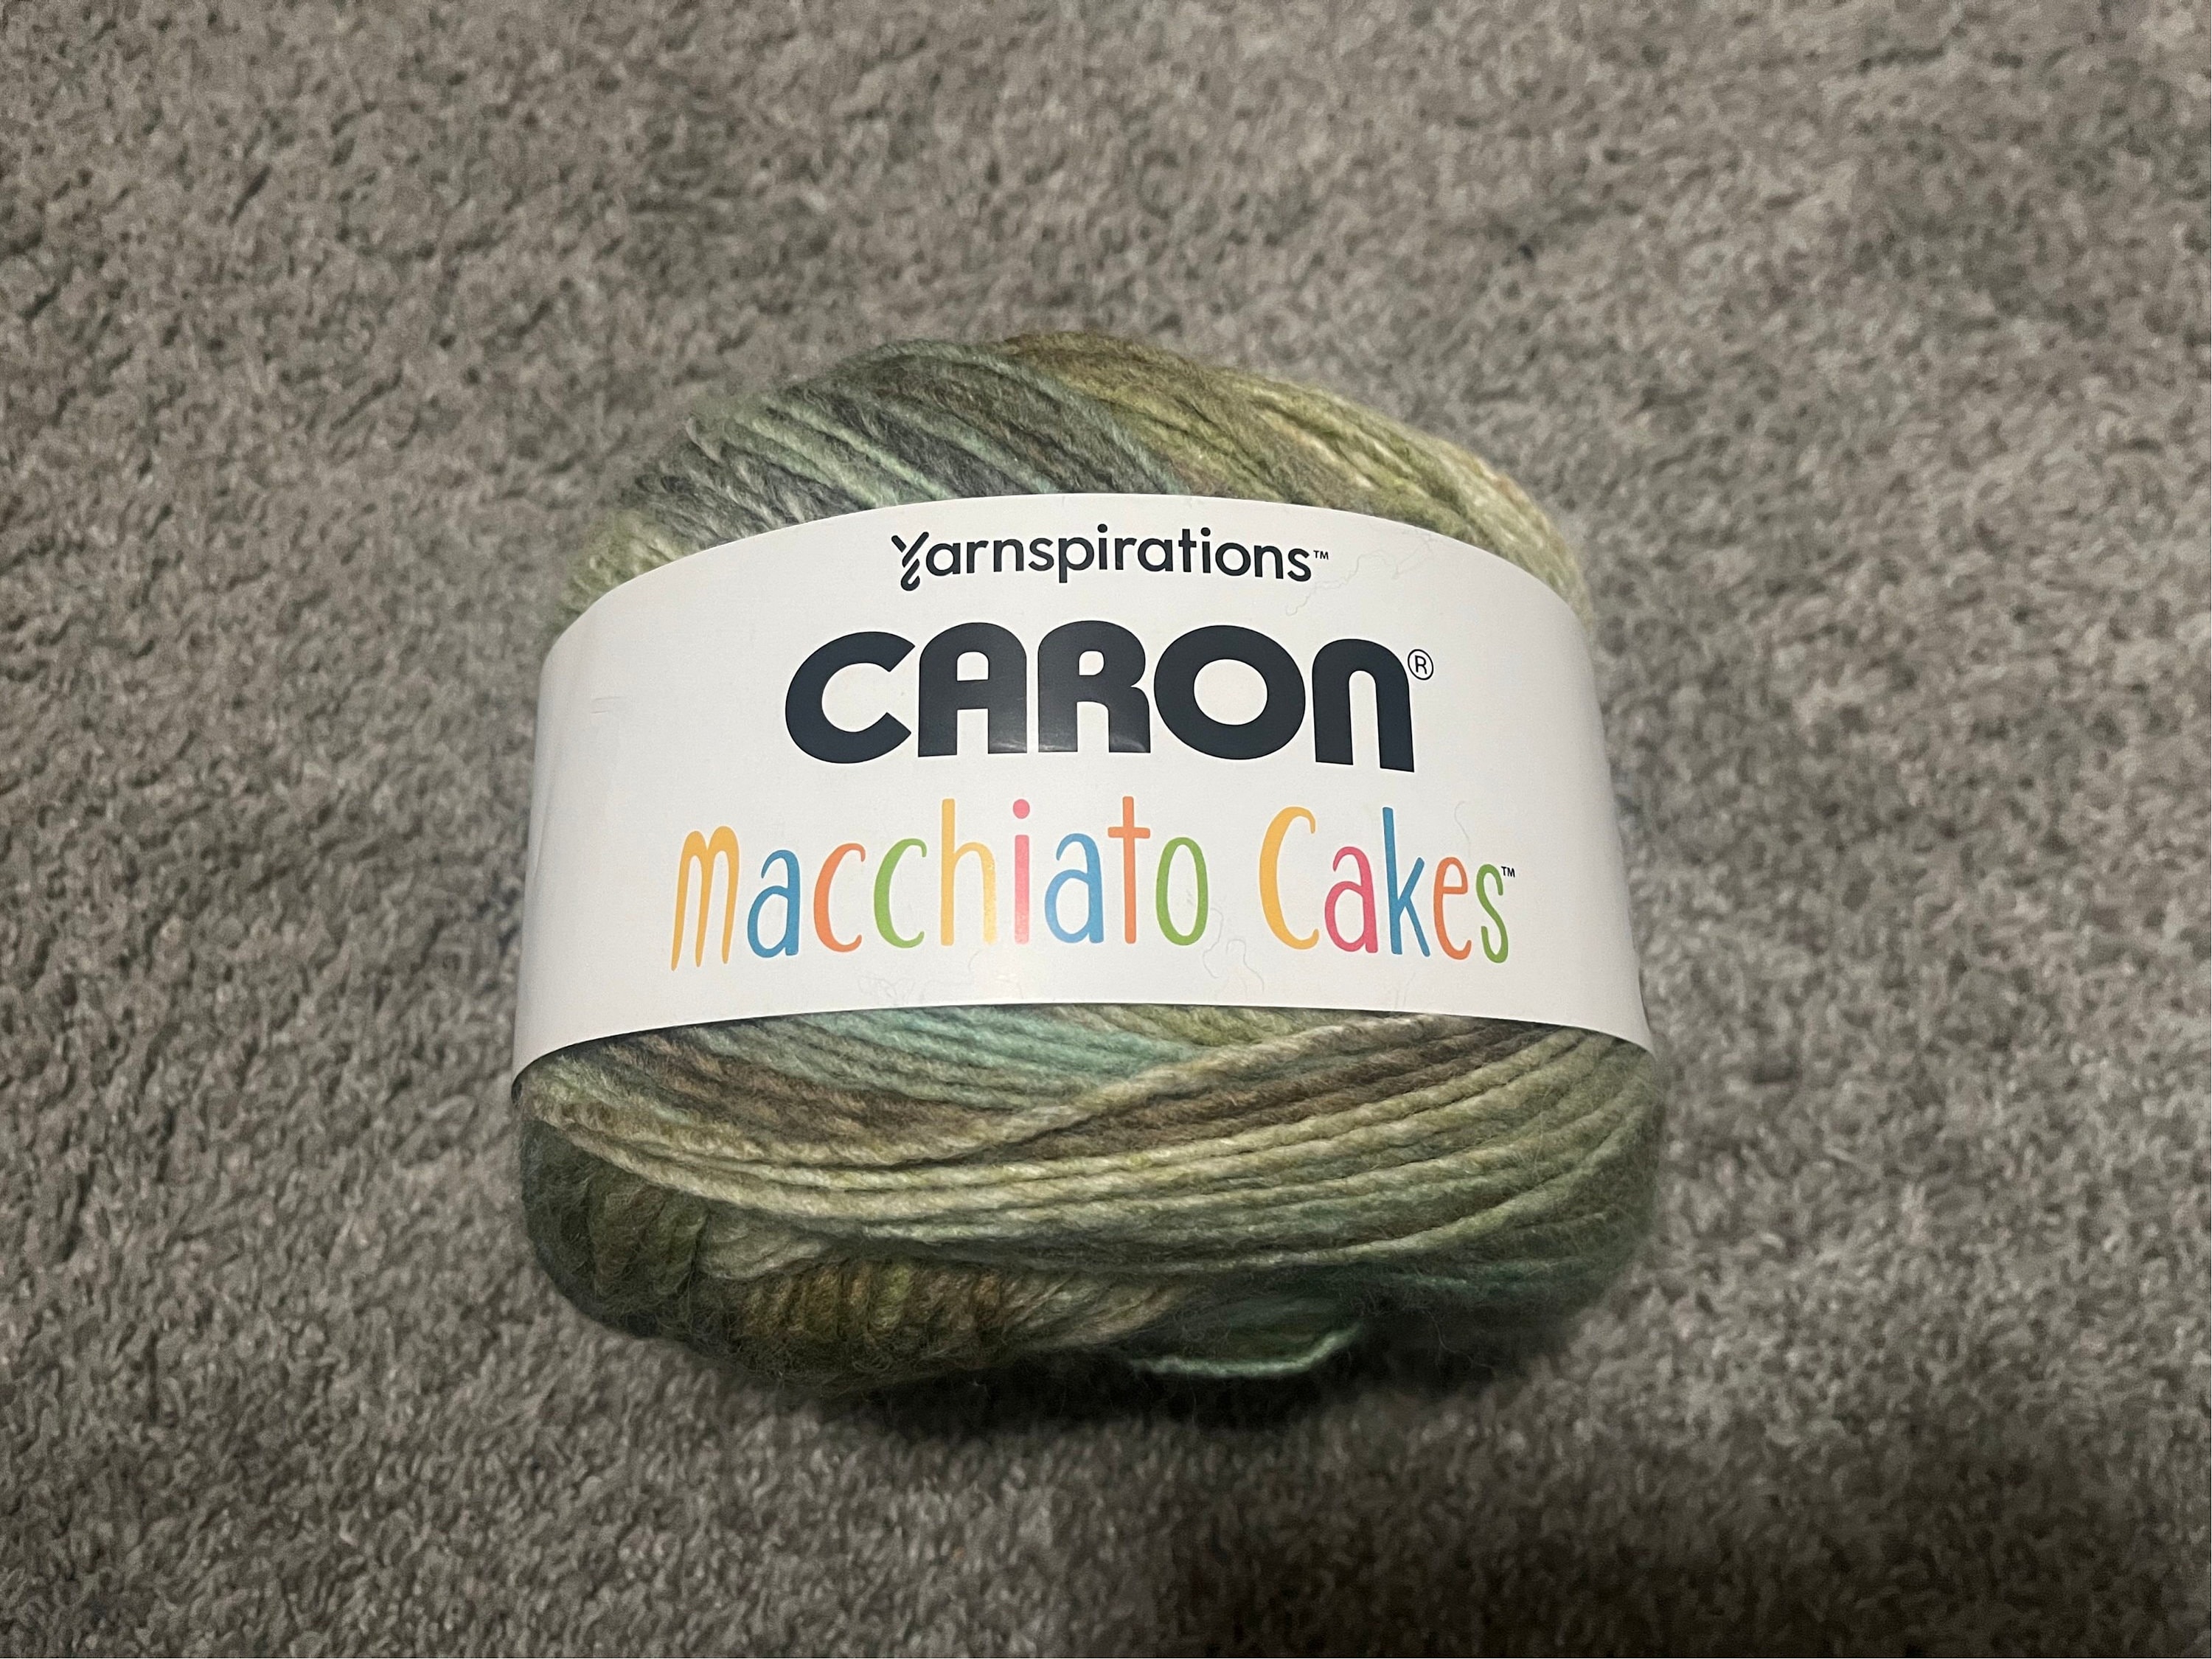 Thoughts on Caron Macchiato cakes? : r/YarnAddicts